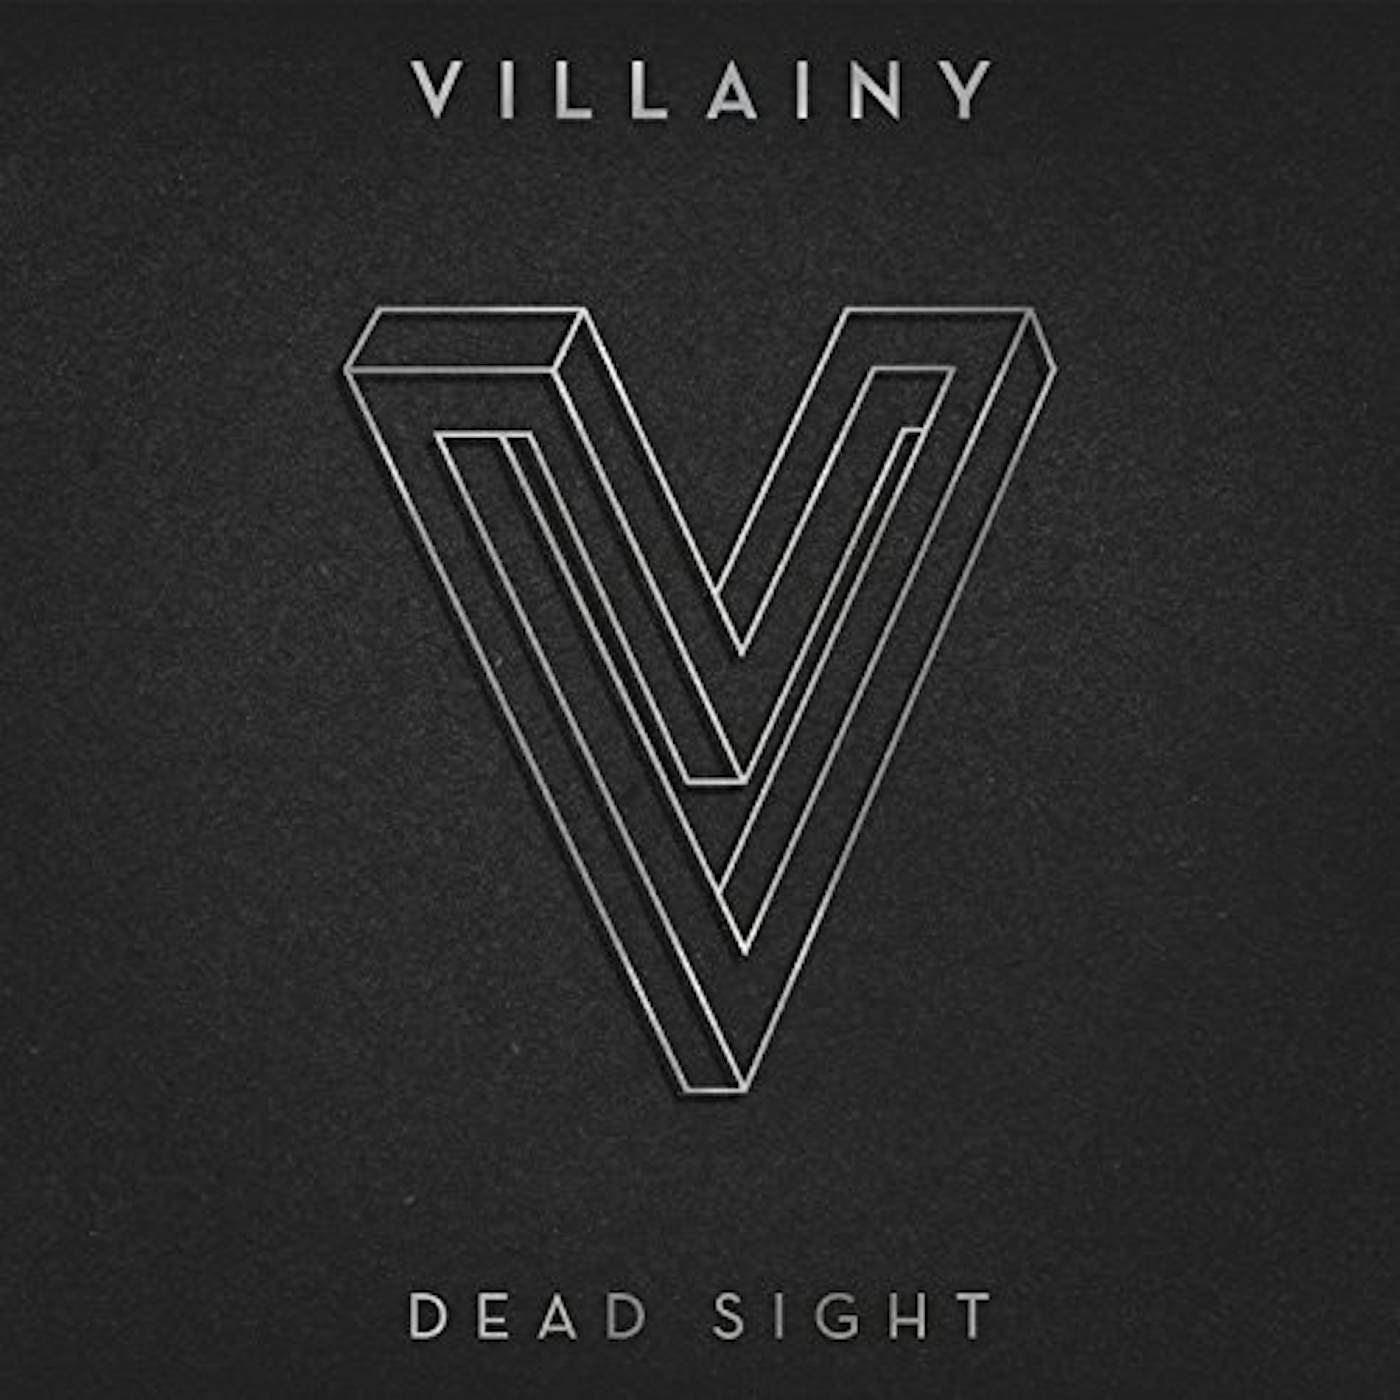 Villainy DEAD SIGHT CD